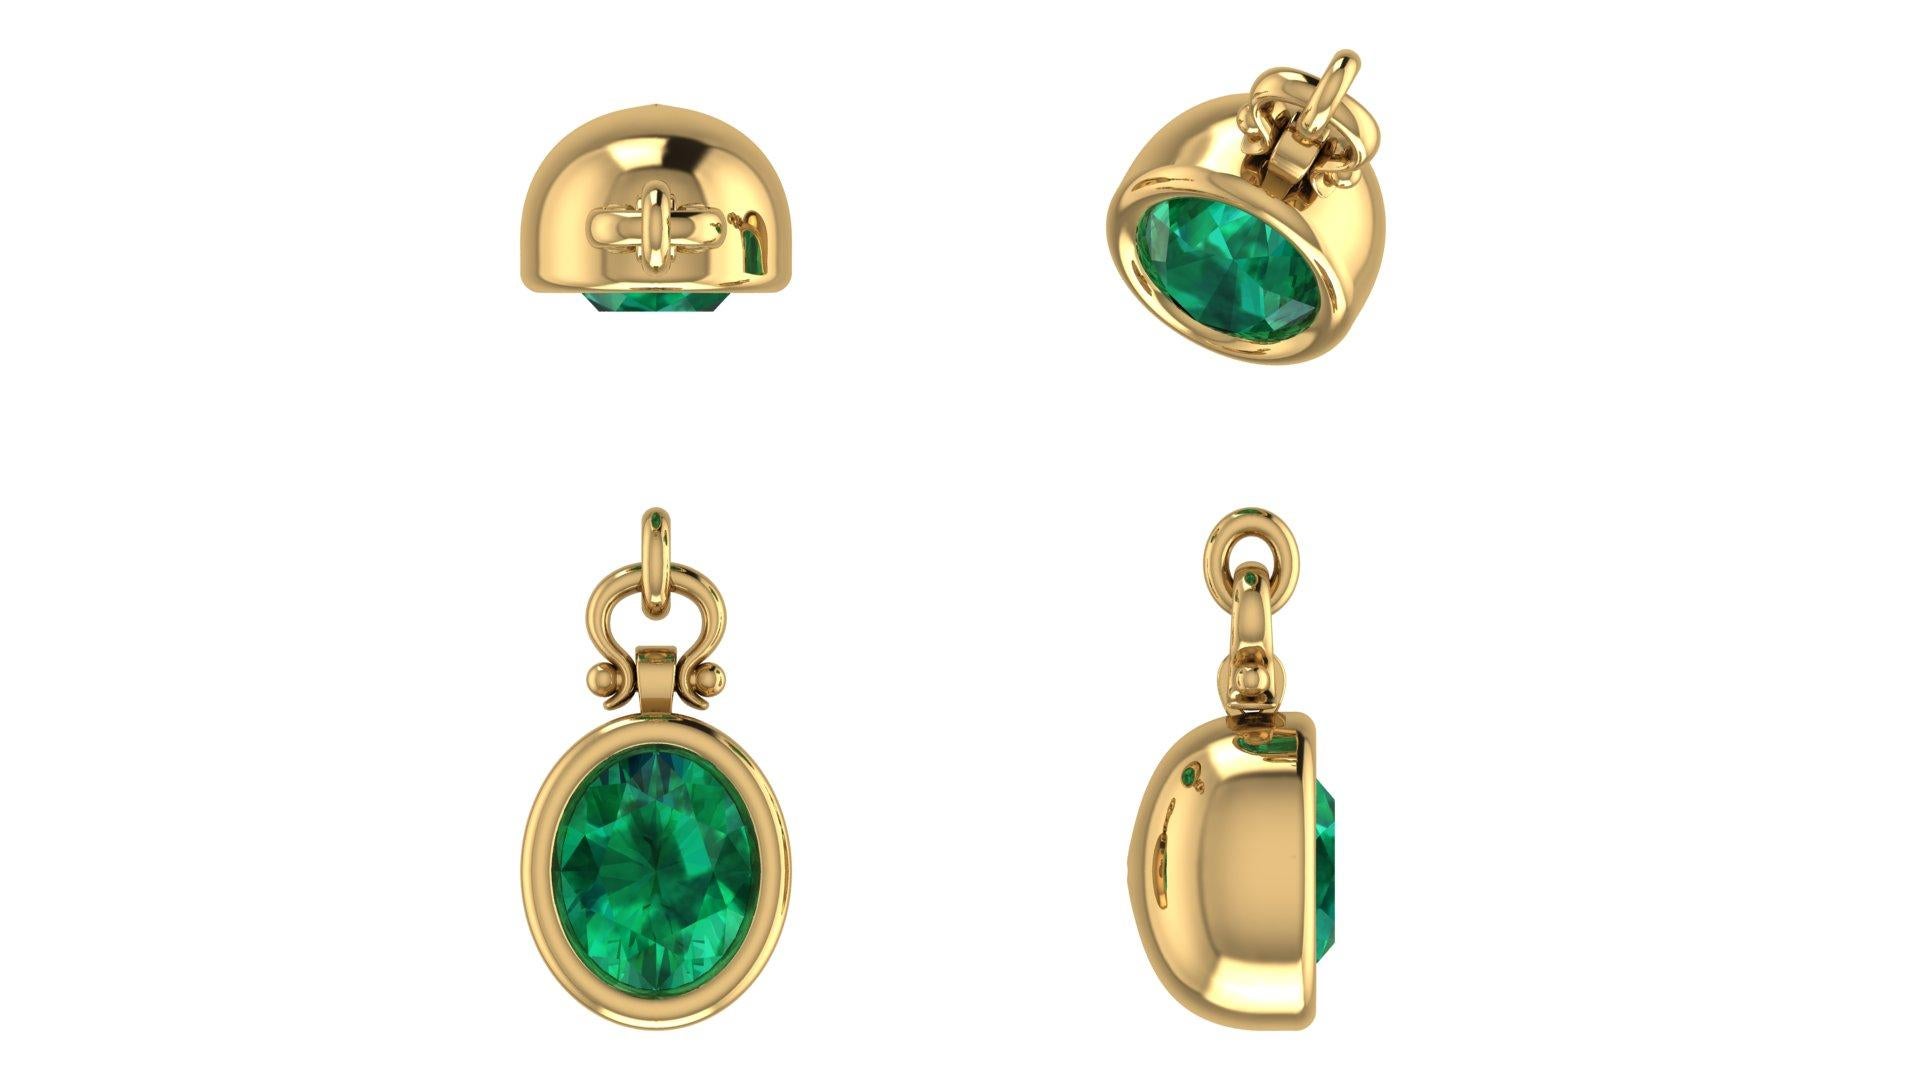 IGITL Certified 2.16 Carat Oval Emerald Pendant Necklace in 18k For Sale 1